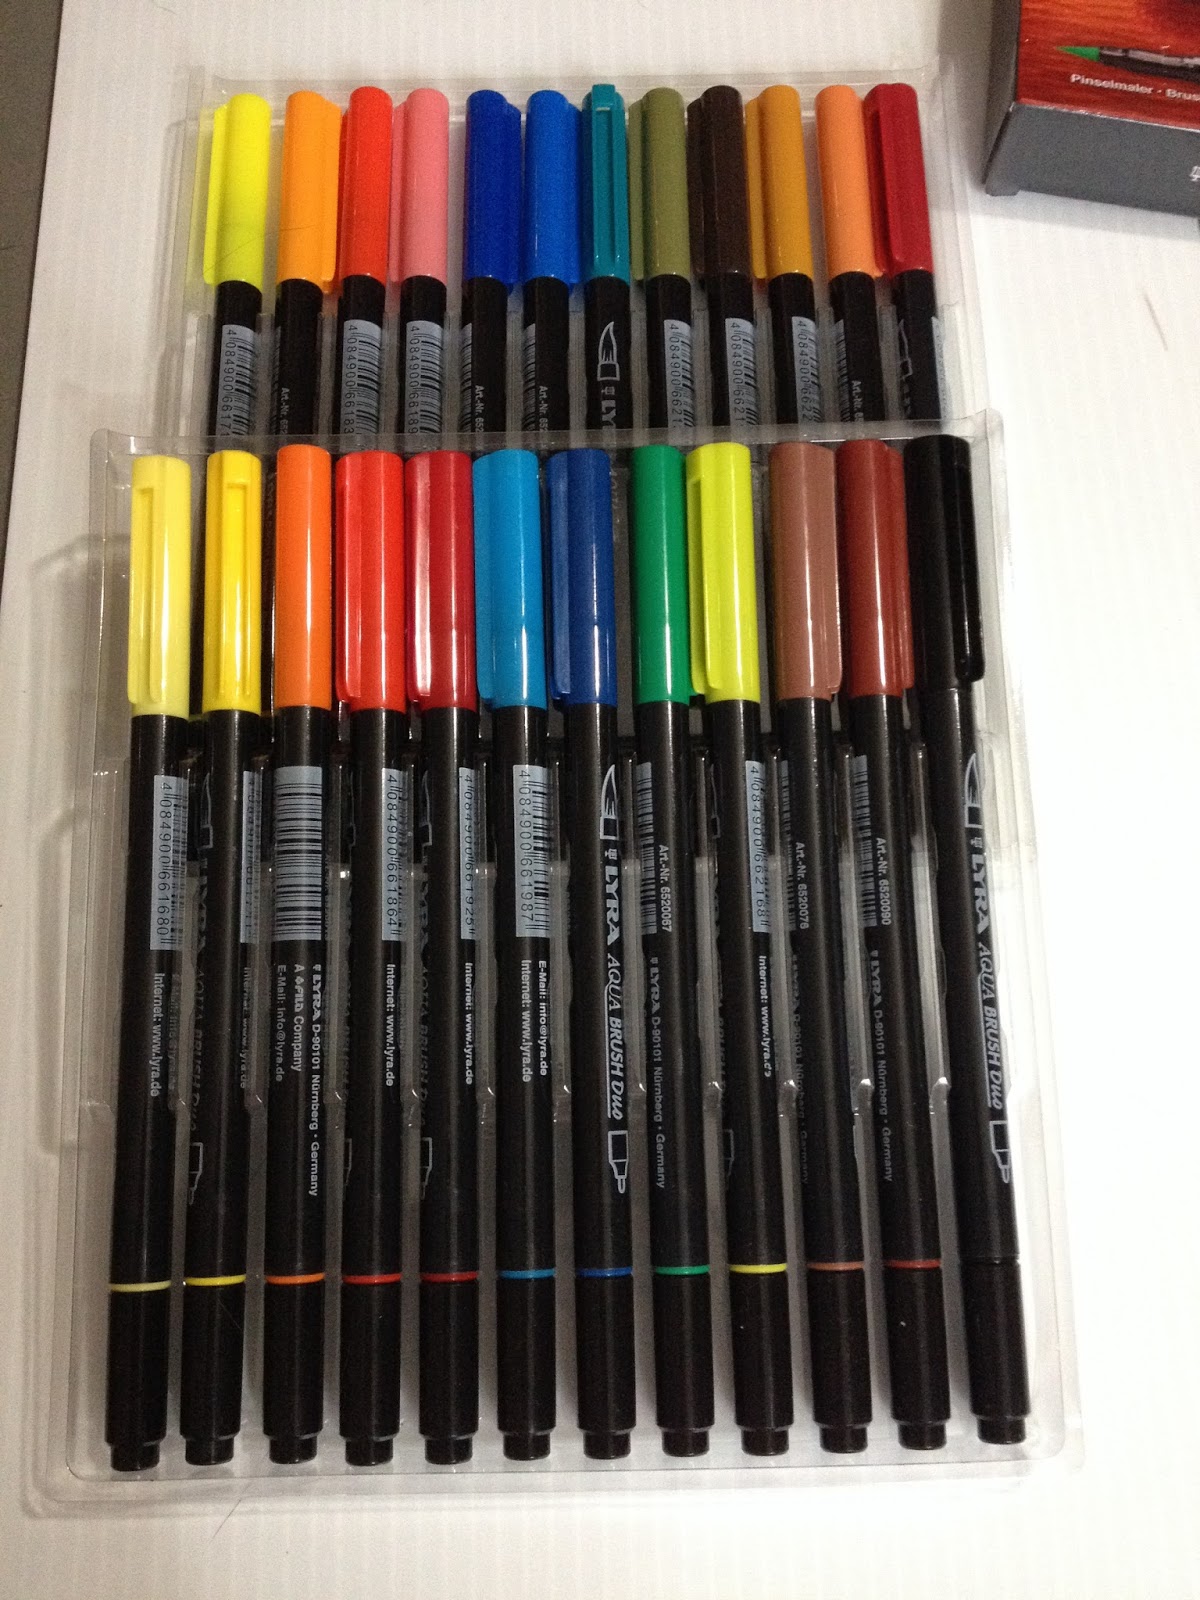 Lyra Aqua Brush Duo 6-Pen Sets – Kings Stationers Artist Supplies